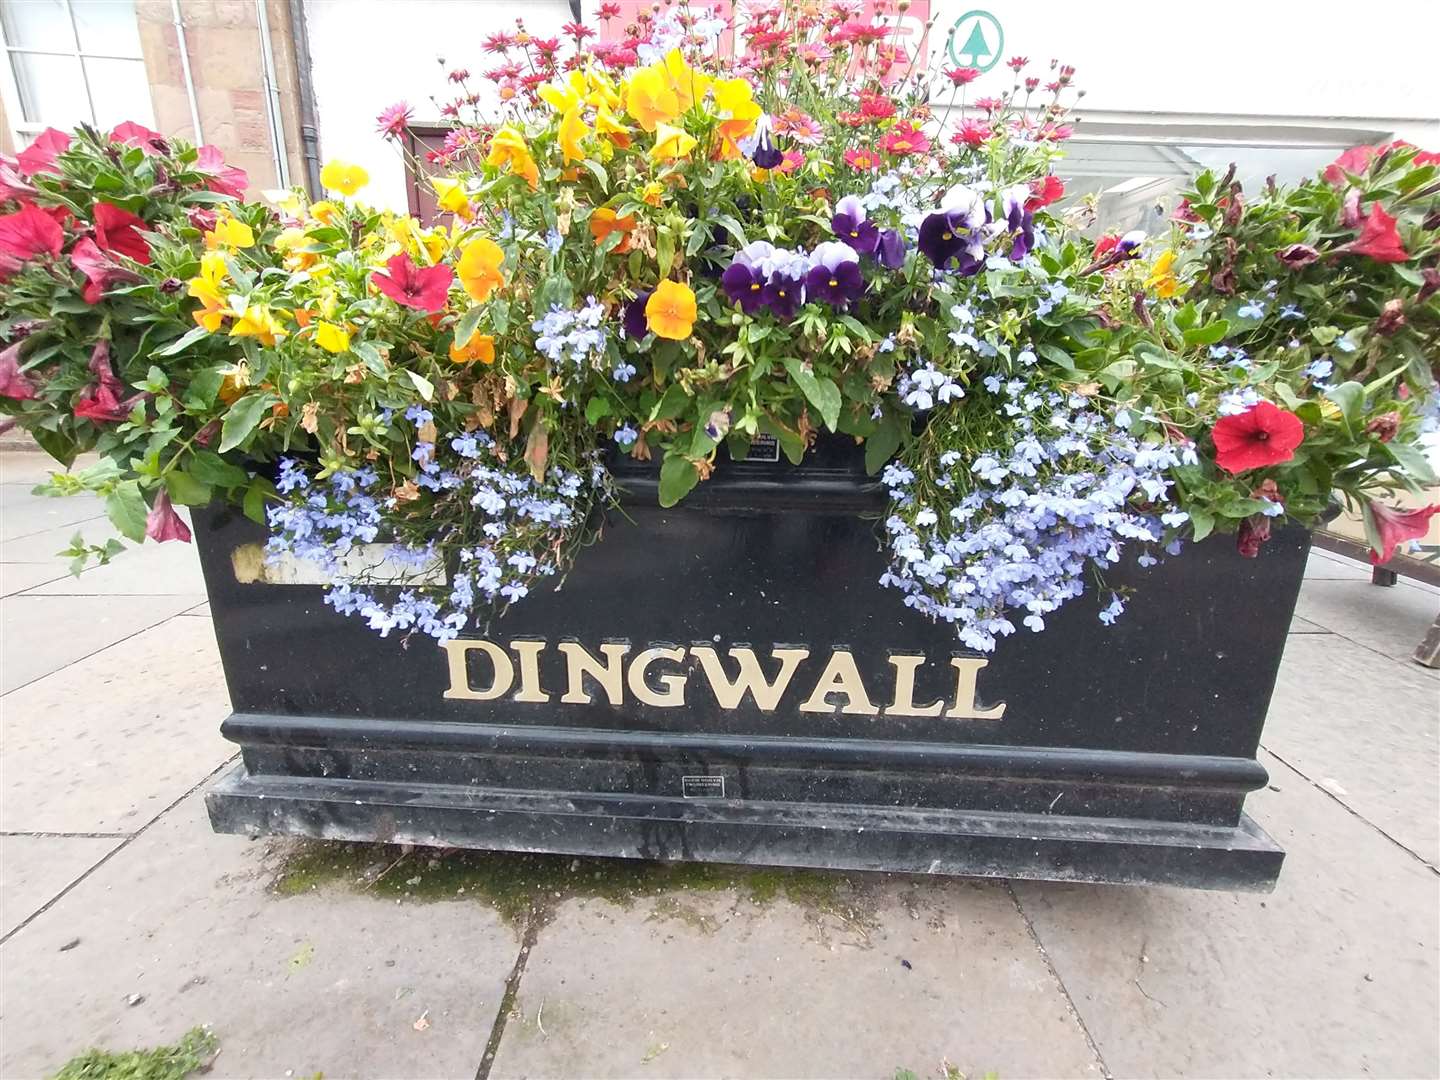 Dingwall benefits from tremerndous community spirit.